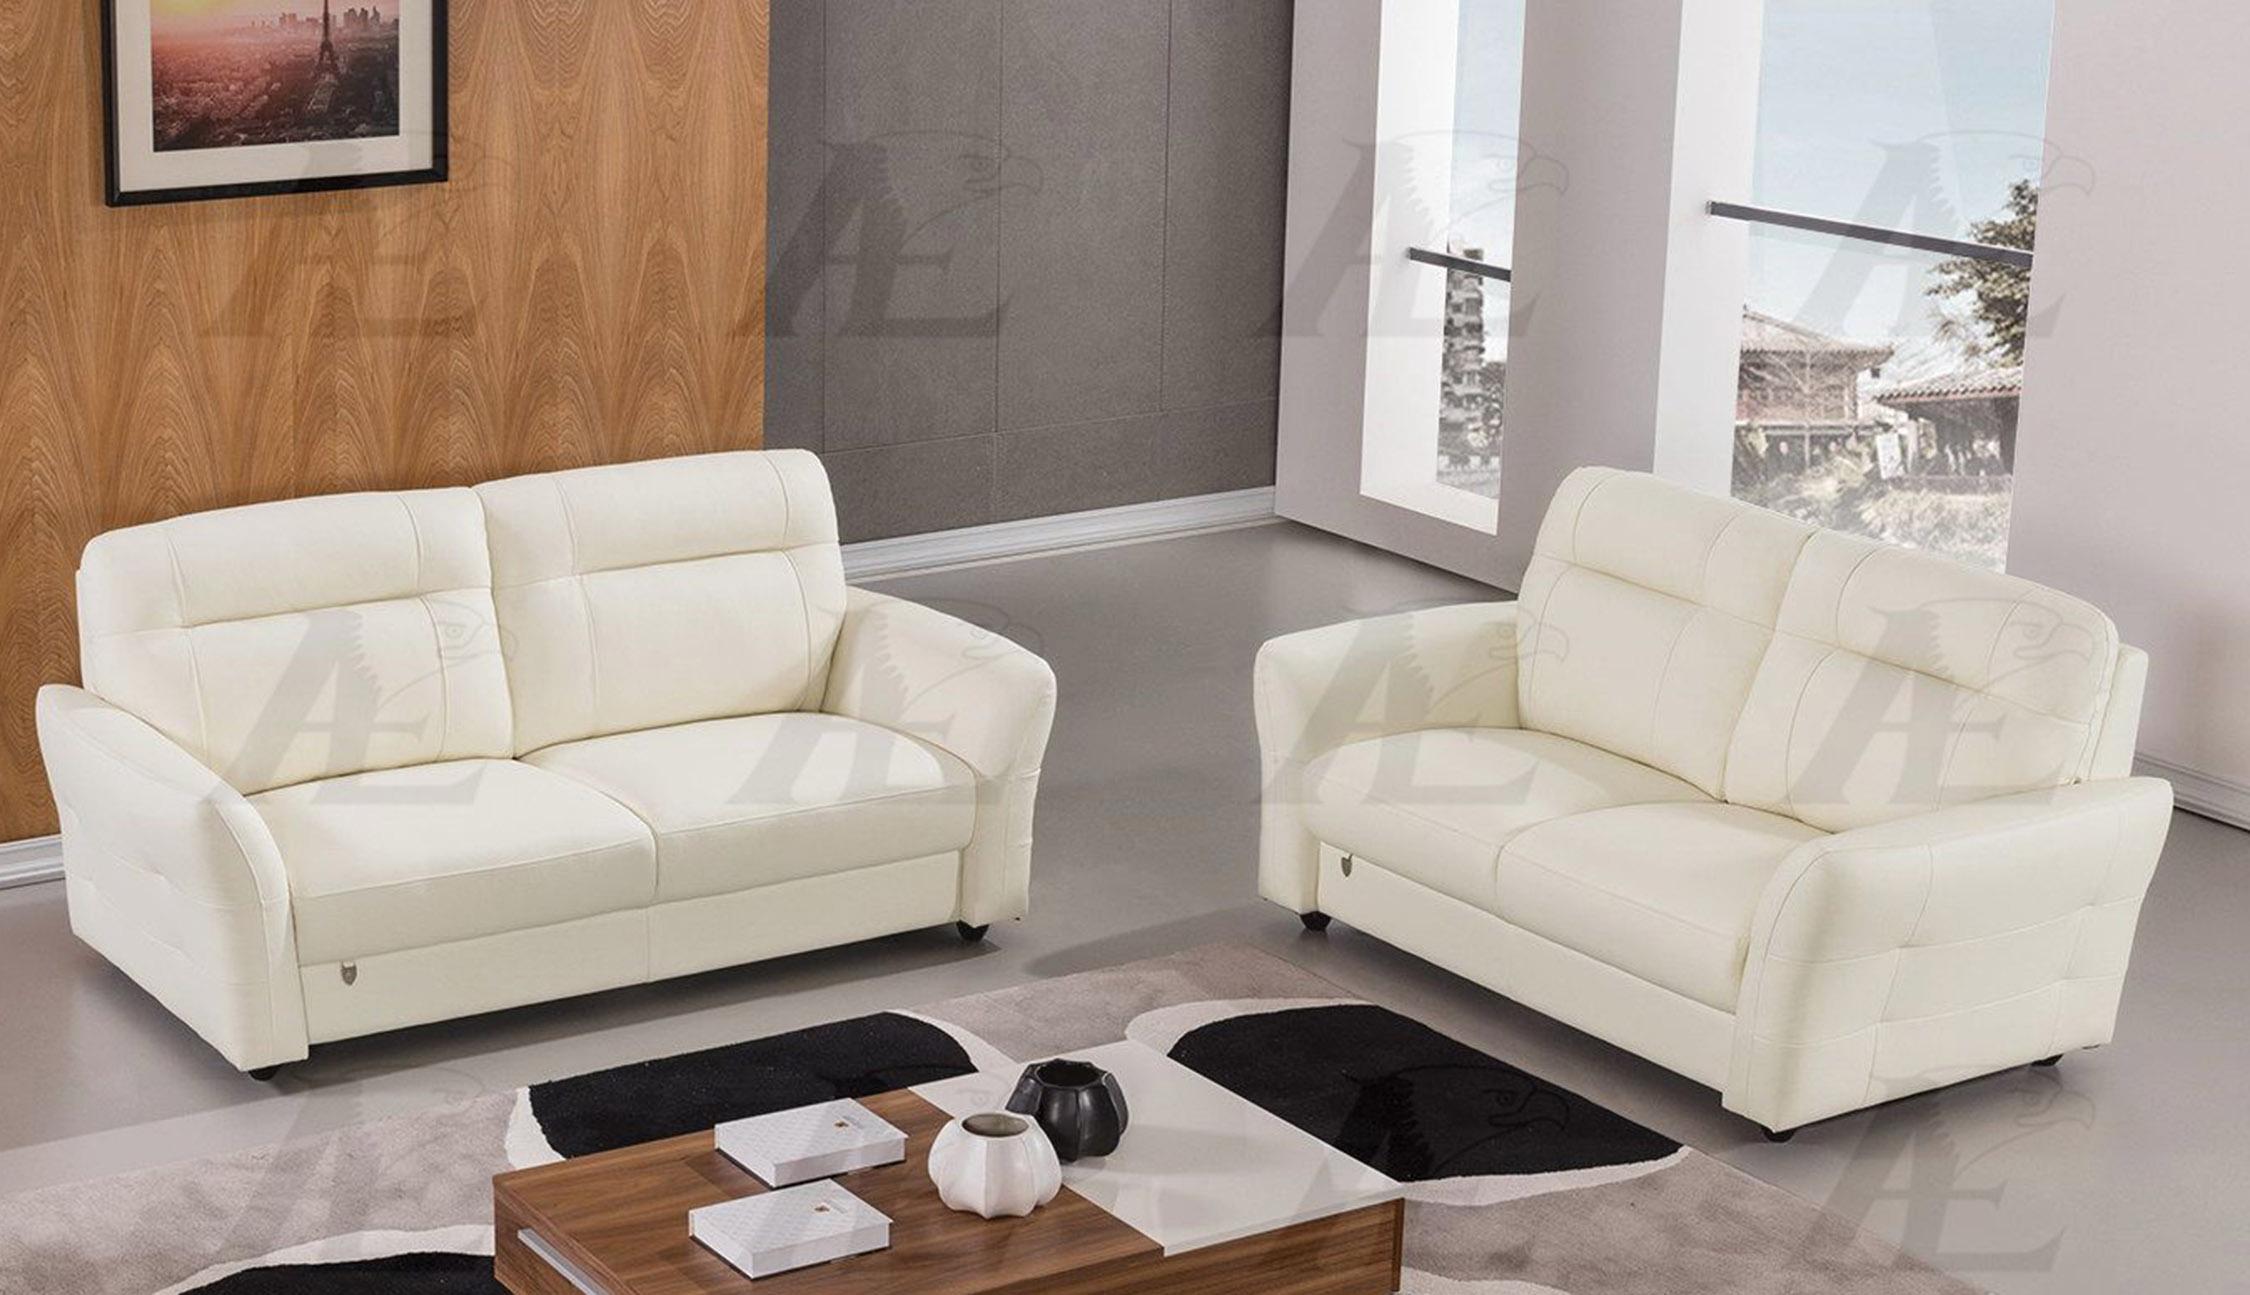 

    
American Eagle Furniture EK090-W-LS Loveseat White EK090-W-LS
